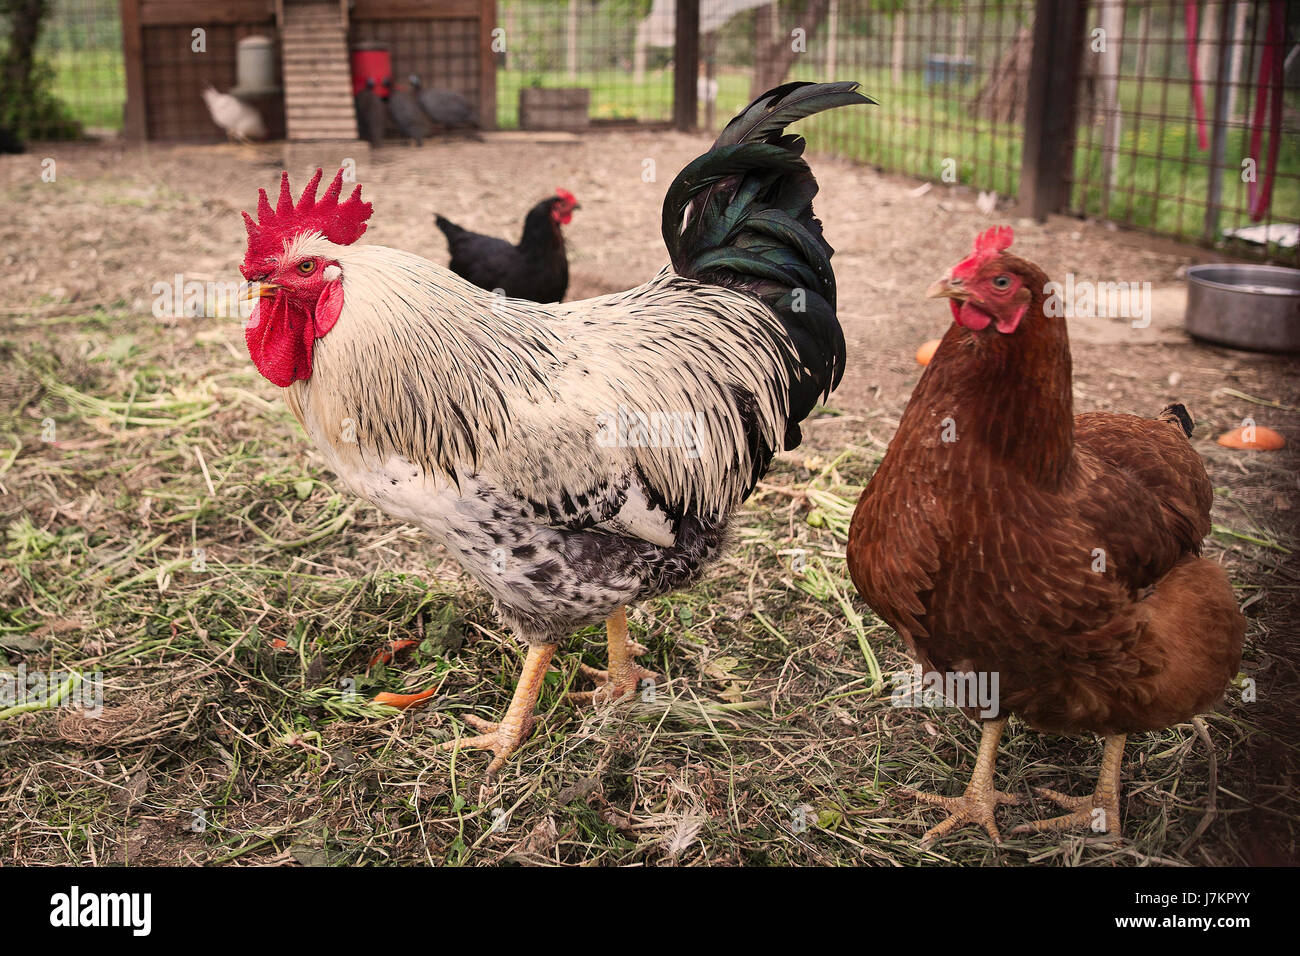 Farm Yard con Rooster Foto de stock